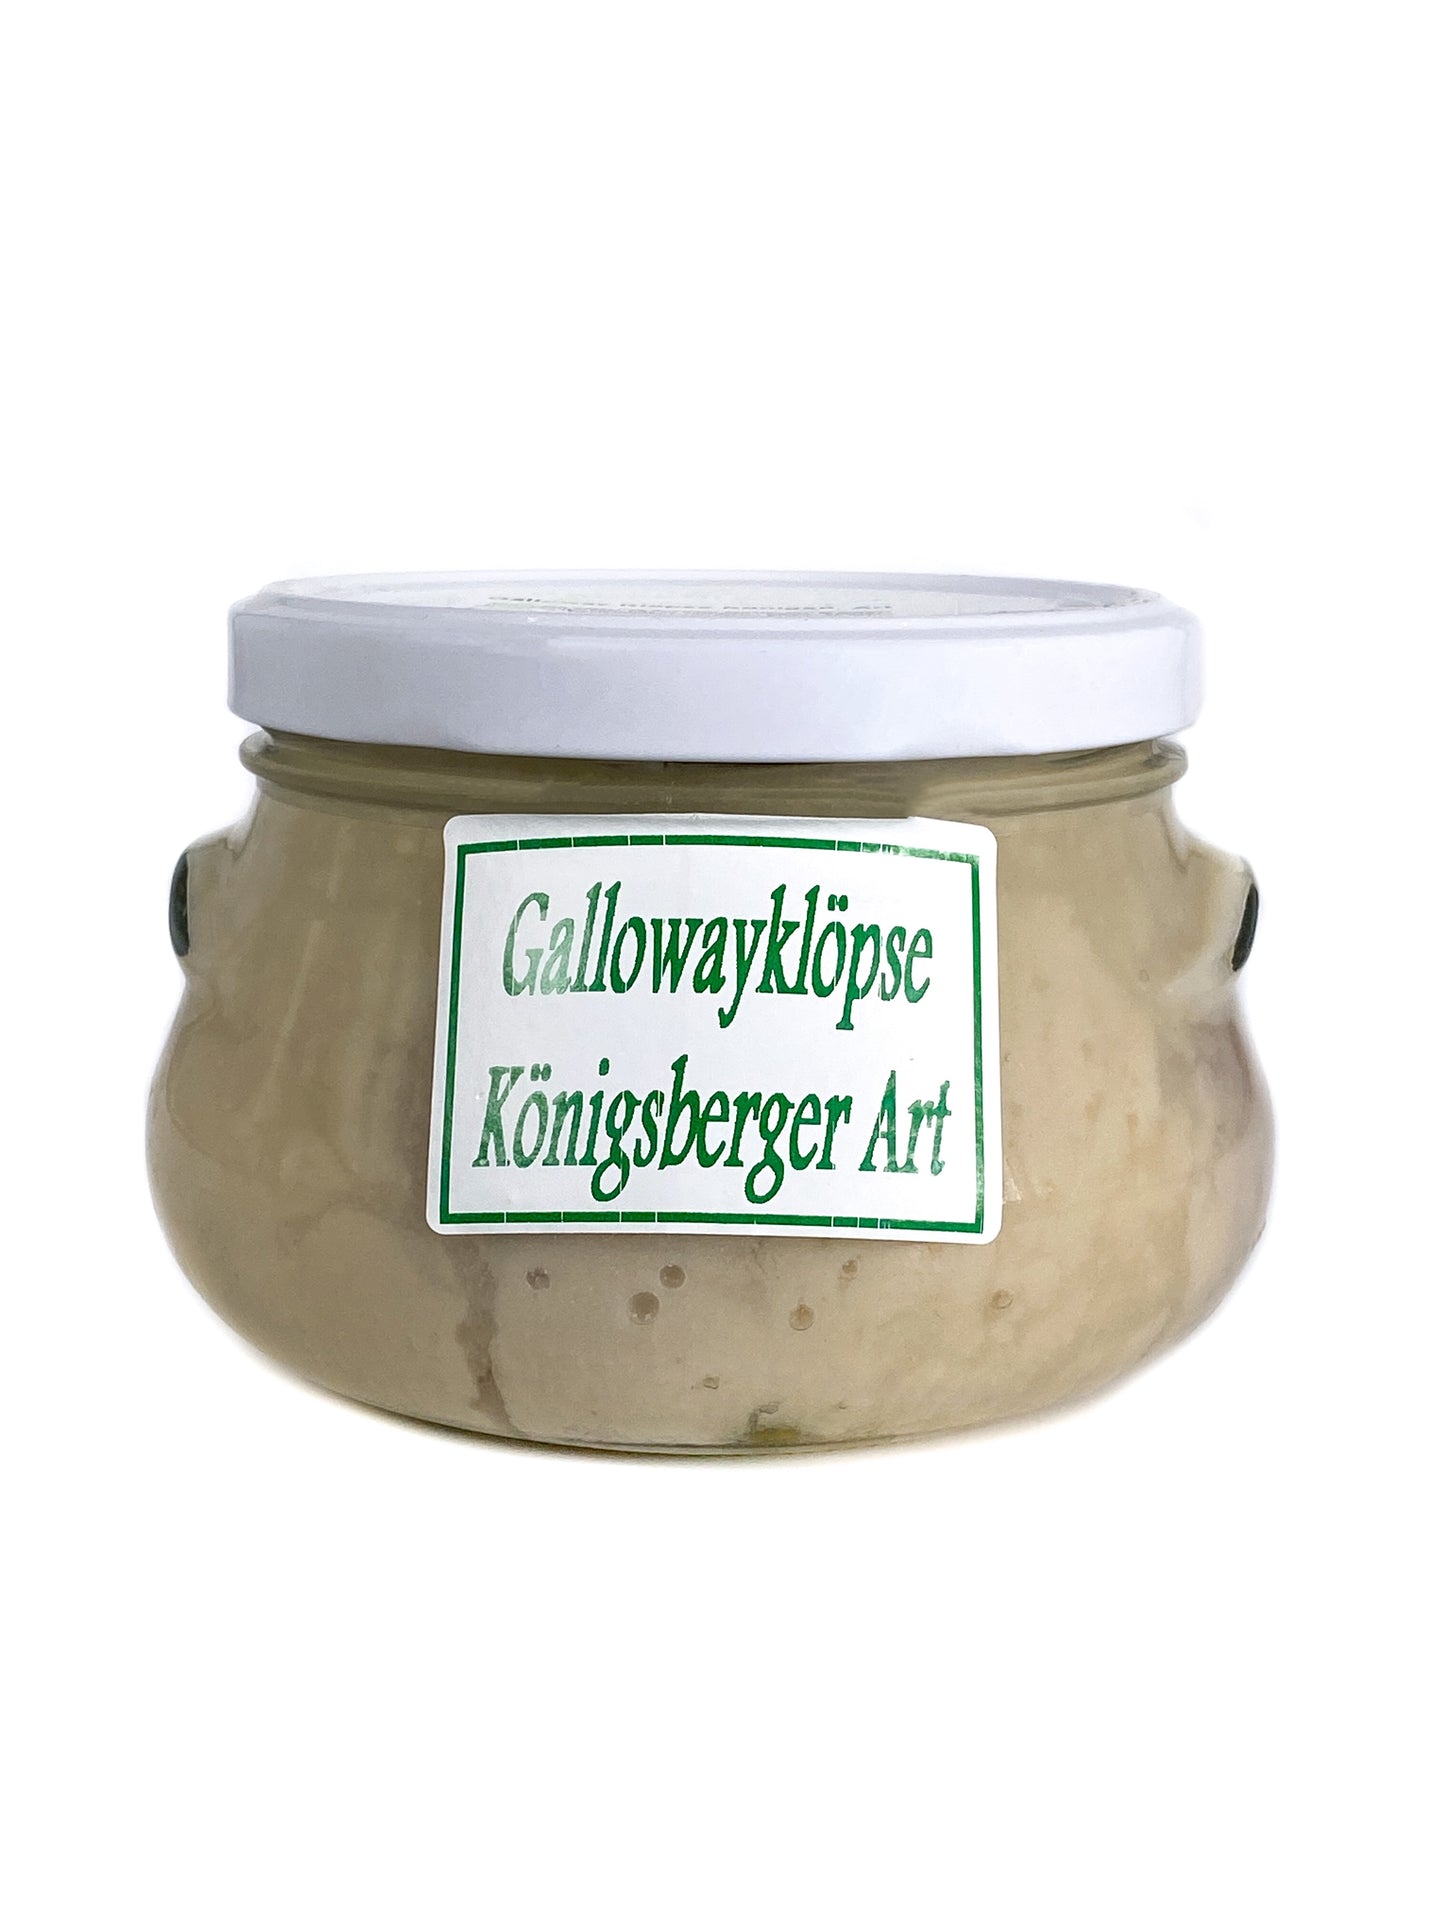 Gallowayklöpse Königsberger Art